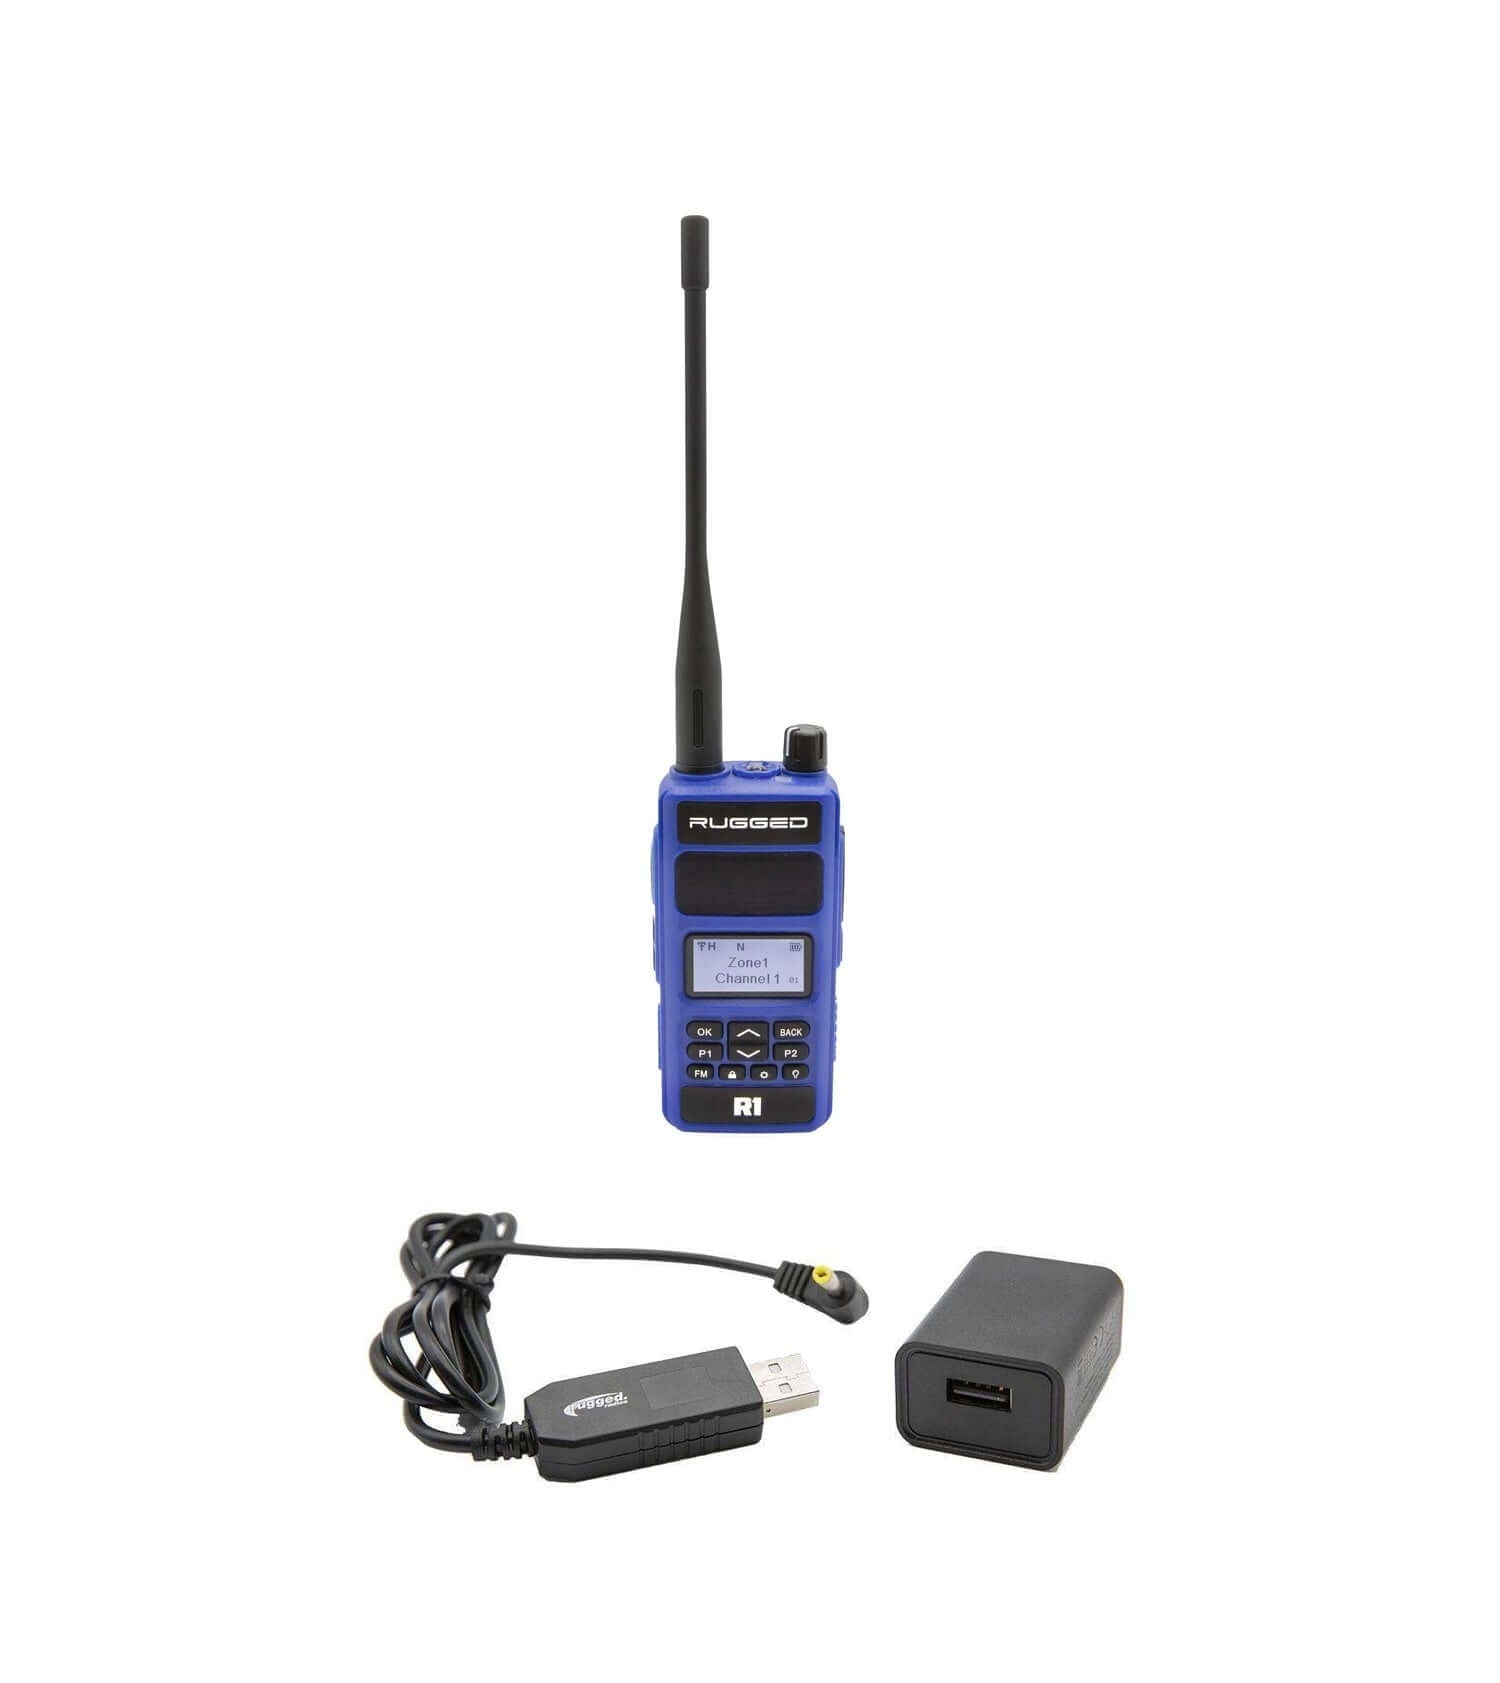 Radio Rugged R1 Handheld Digital & Analog UHF/VHF - $135.99